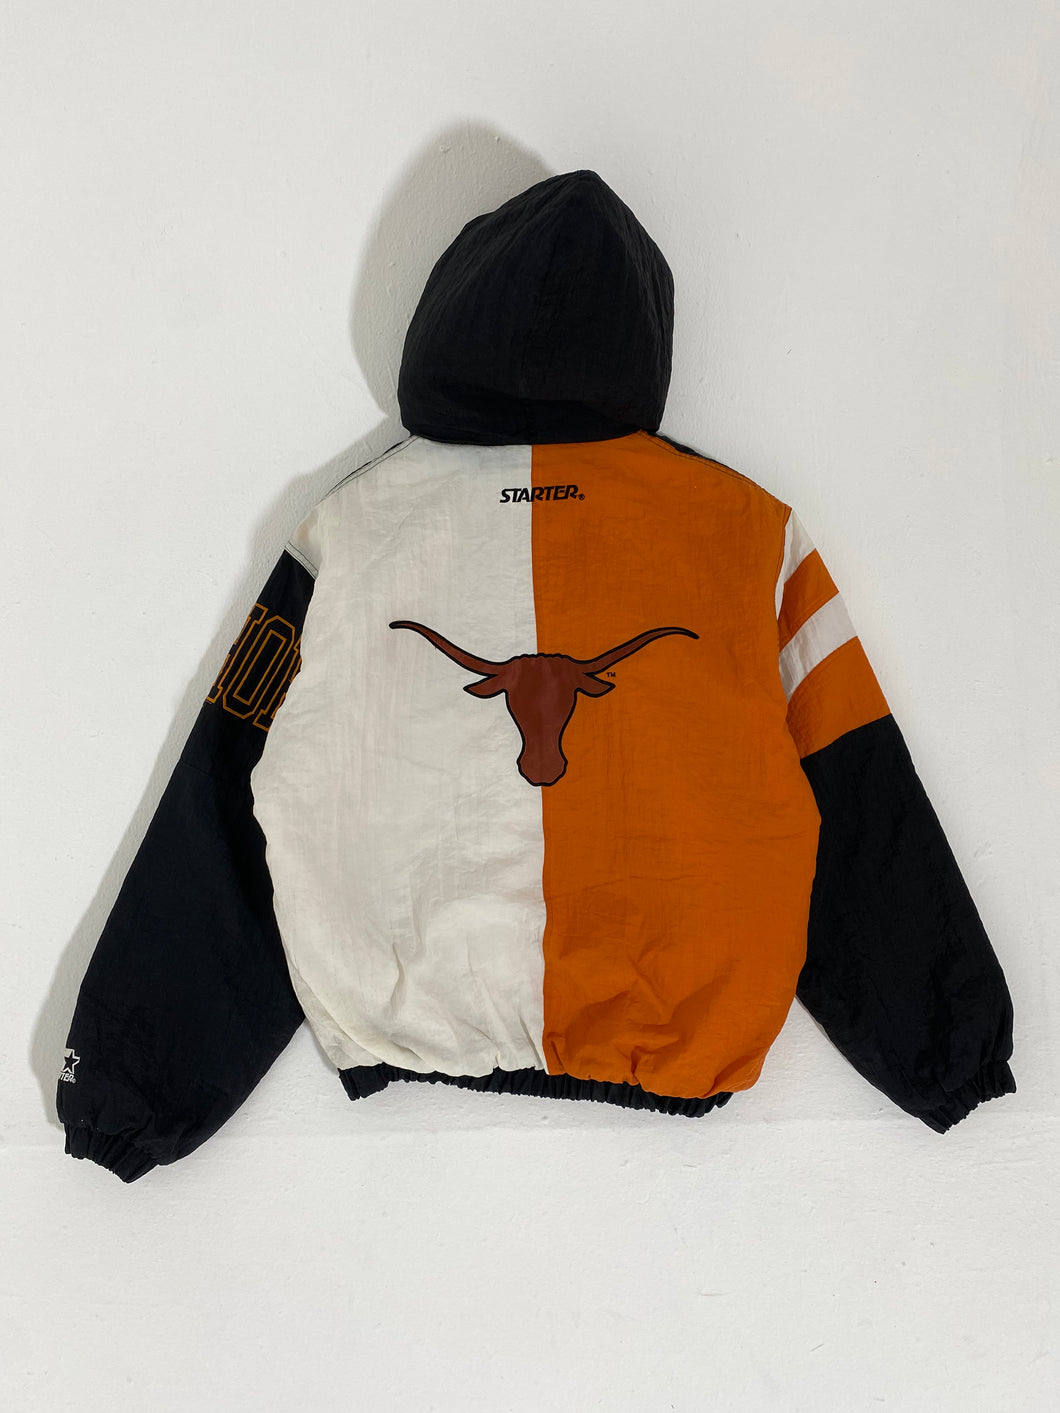 Vintage 1990's University of Texas Longhorns STARTER Parka Jacket Sz. L